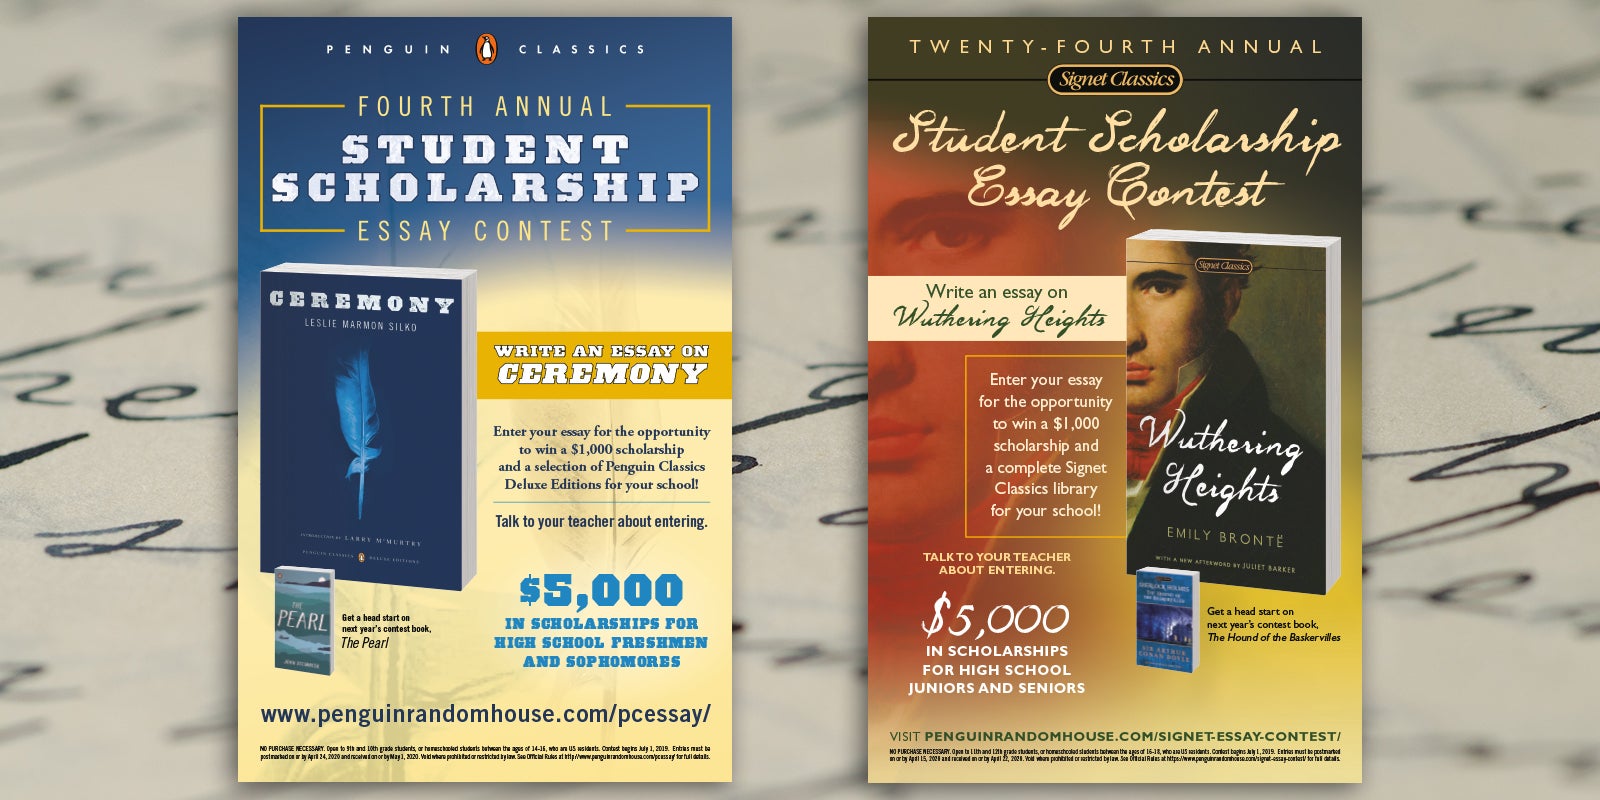 The Penguin Classics and Signet Classics Scholarship Essay Contests